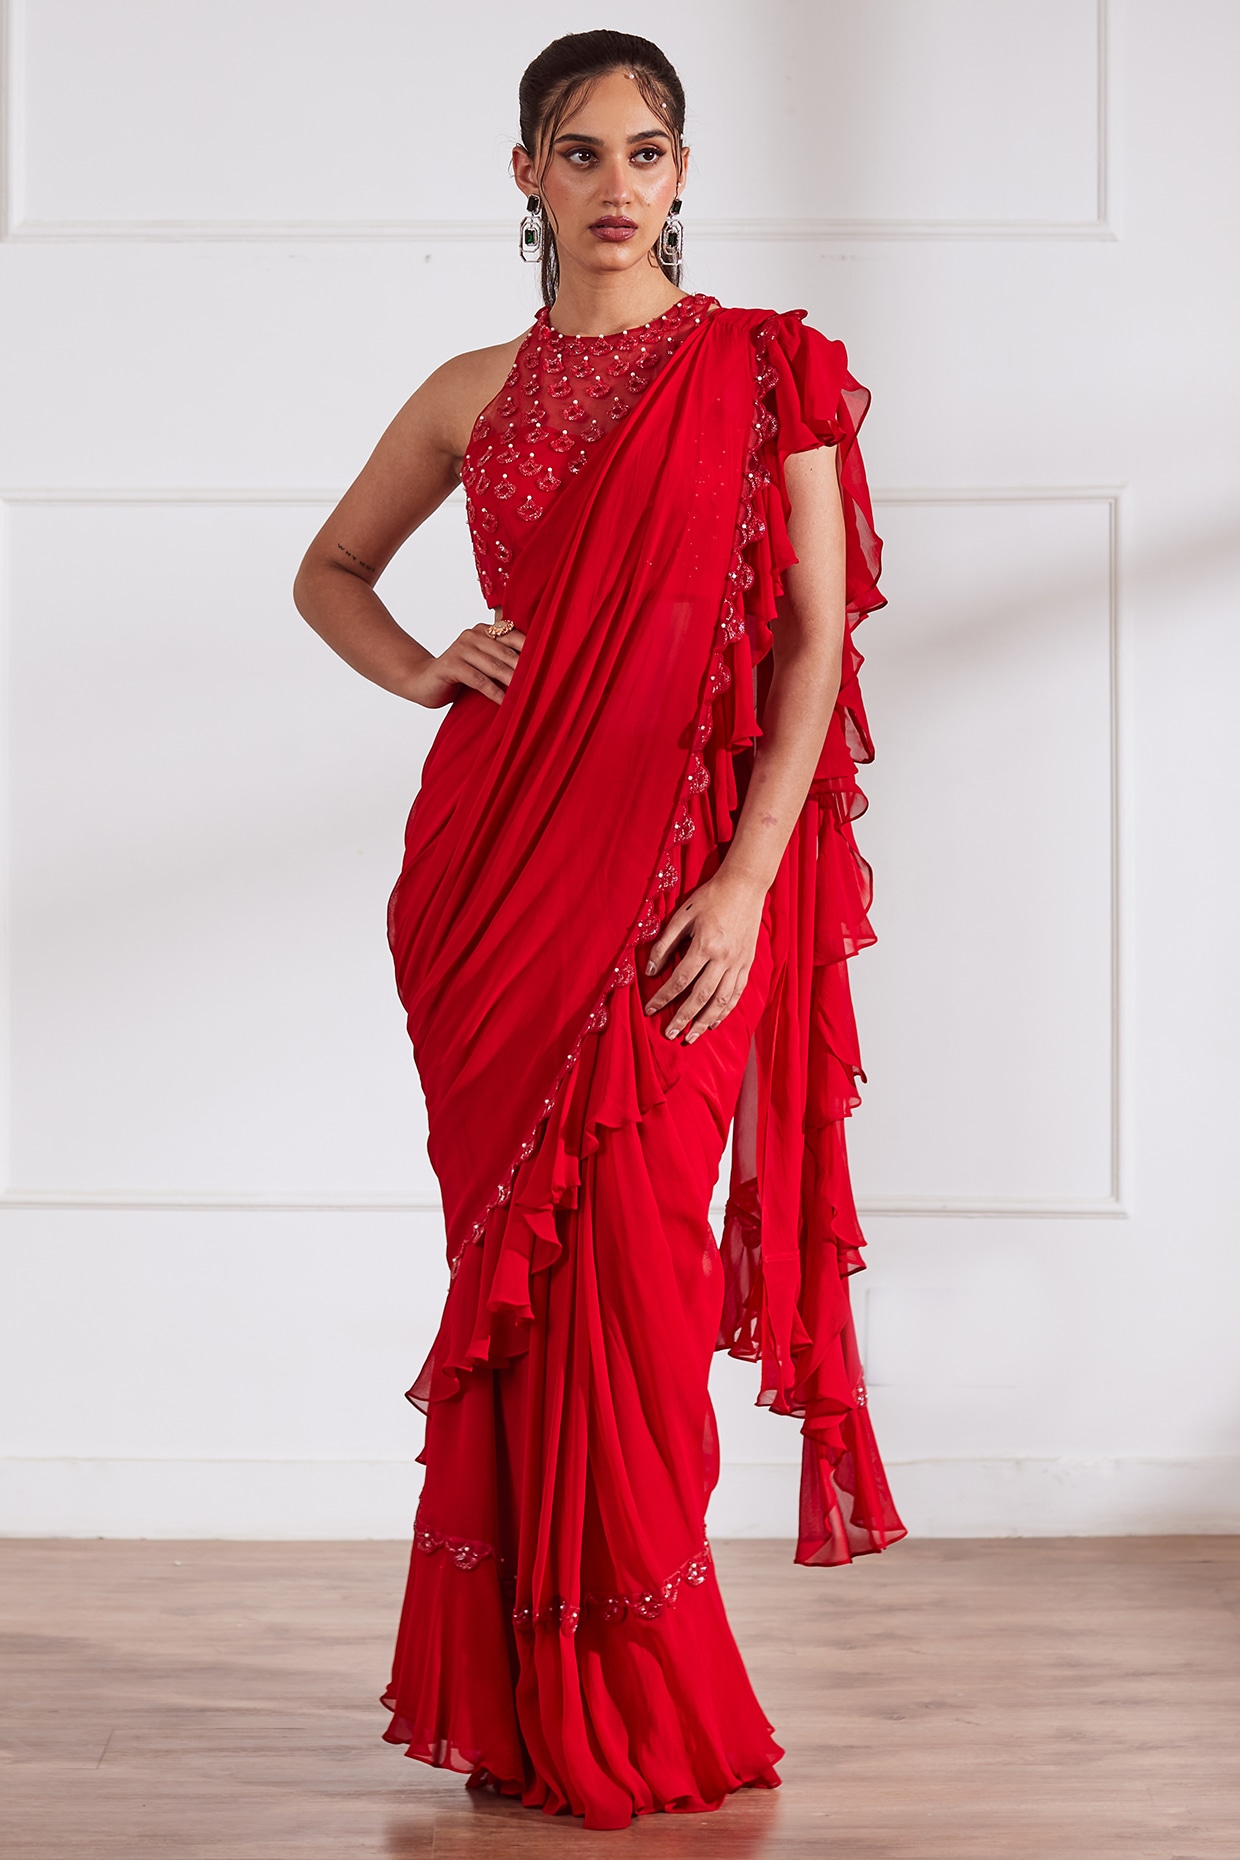 Colorful CDM Stone Work Black Sari Georgette Saree With Printed Blouse  Dress Top | eBay